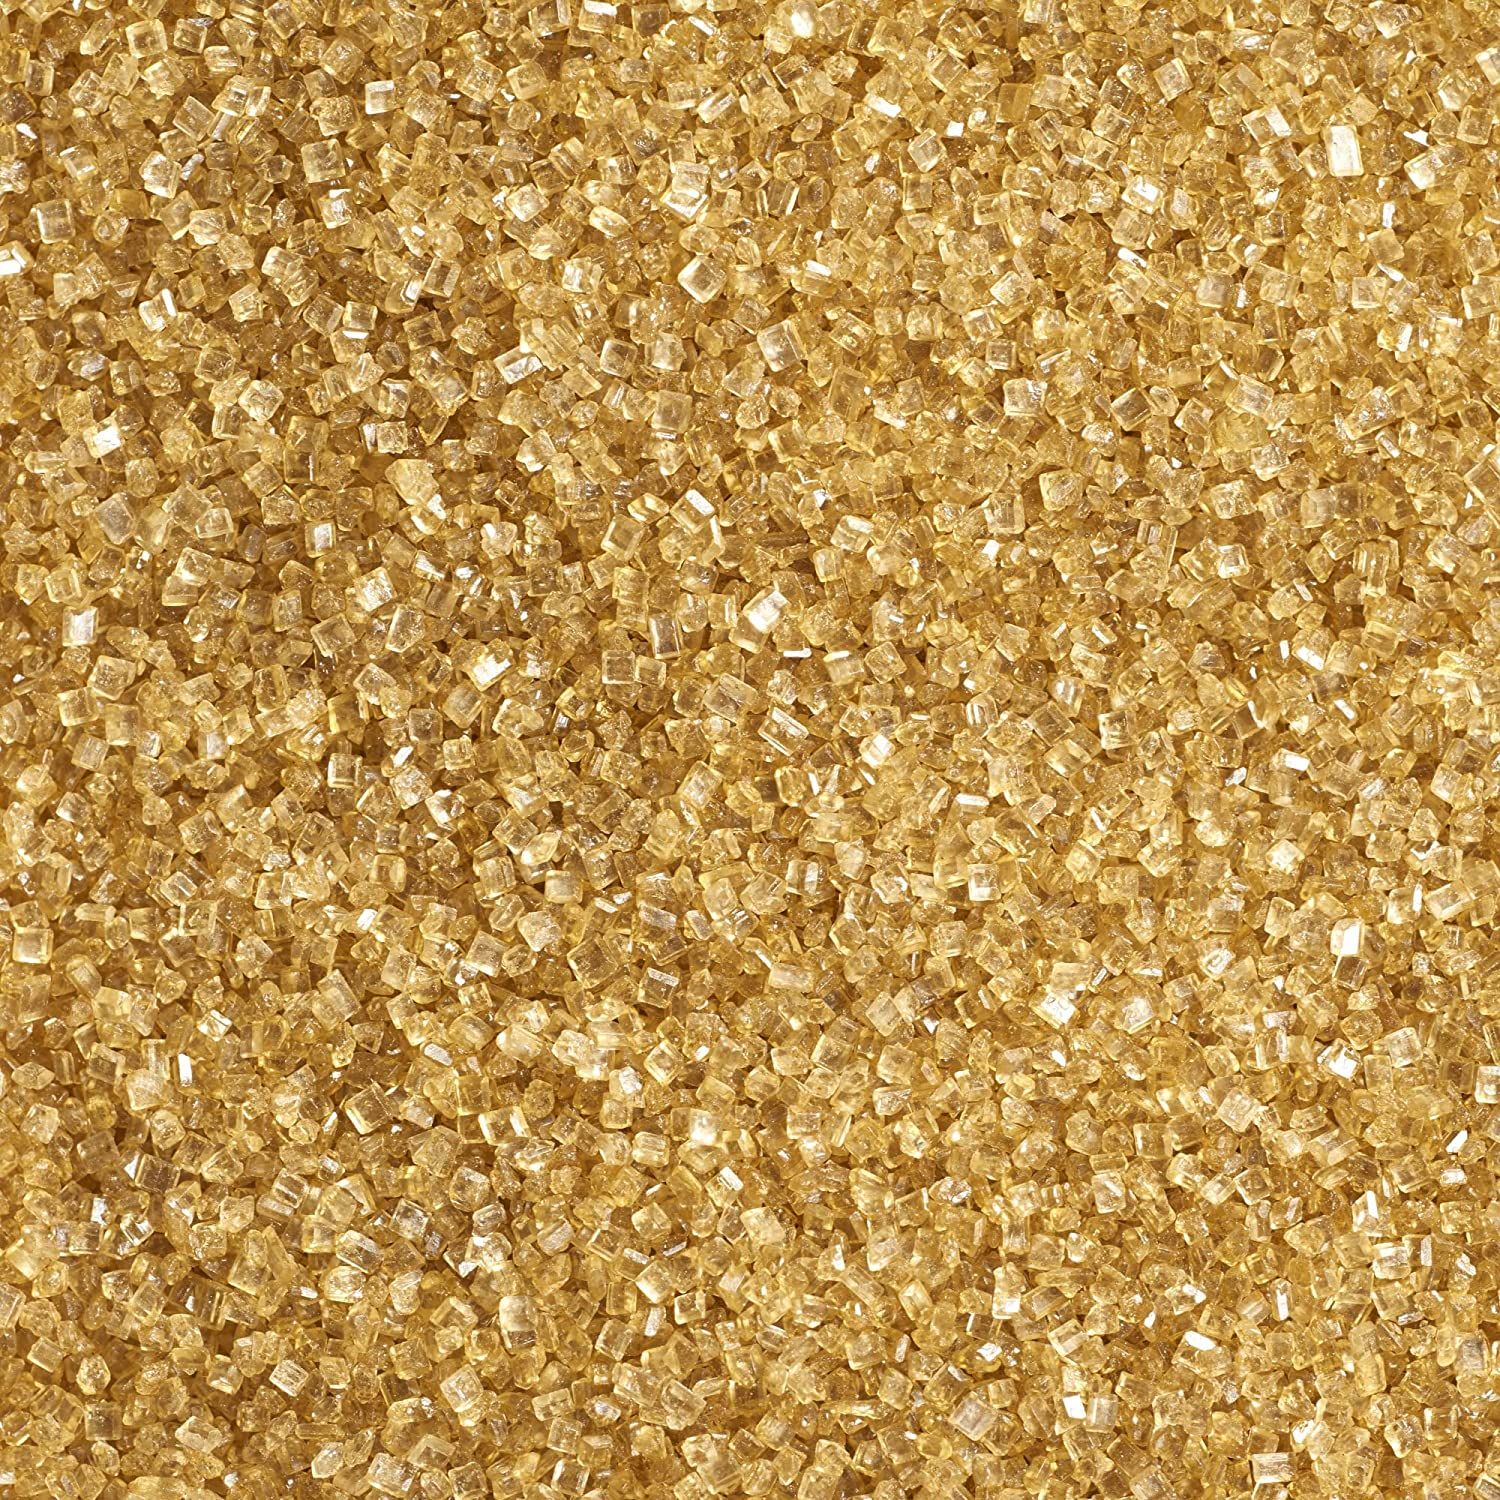 DecoPac Sanding Sugar, Sparkling Gold Edible Sugar Sprinkles, Edible Sanding Sugar in Handheld Co... | Amazon (US)